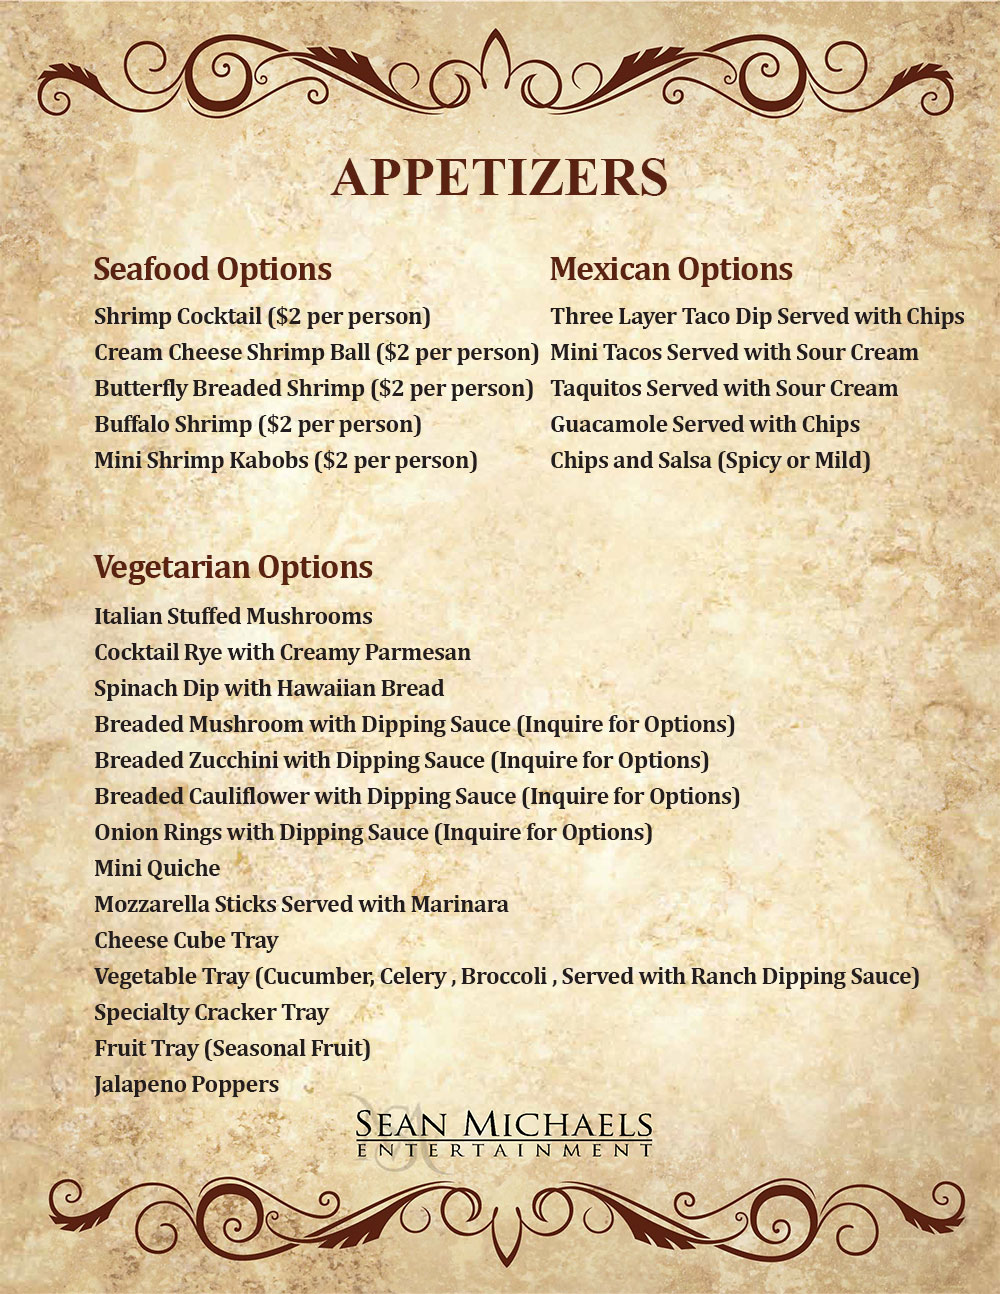 Sean-Michaels-Entertainment-appetizer-1-menu